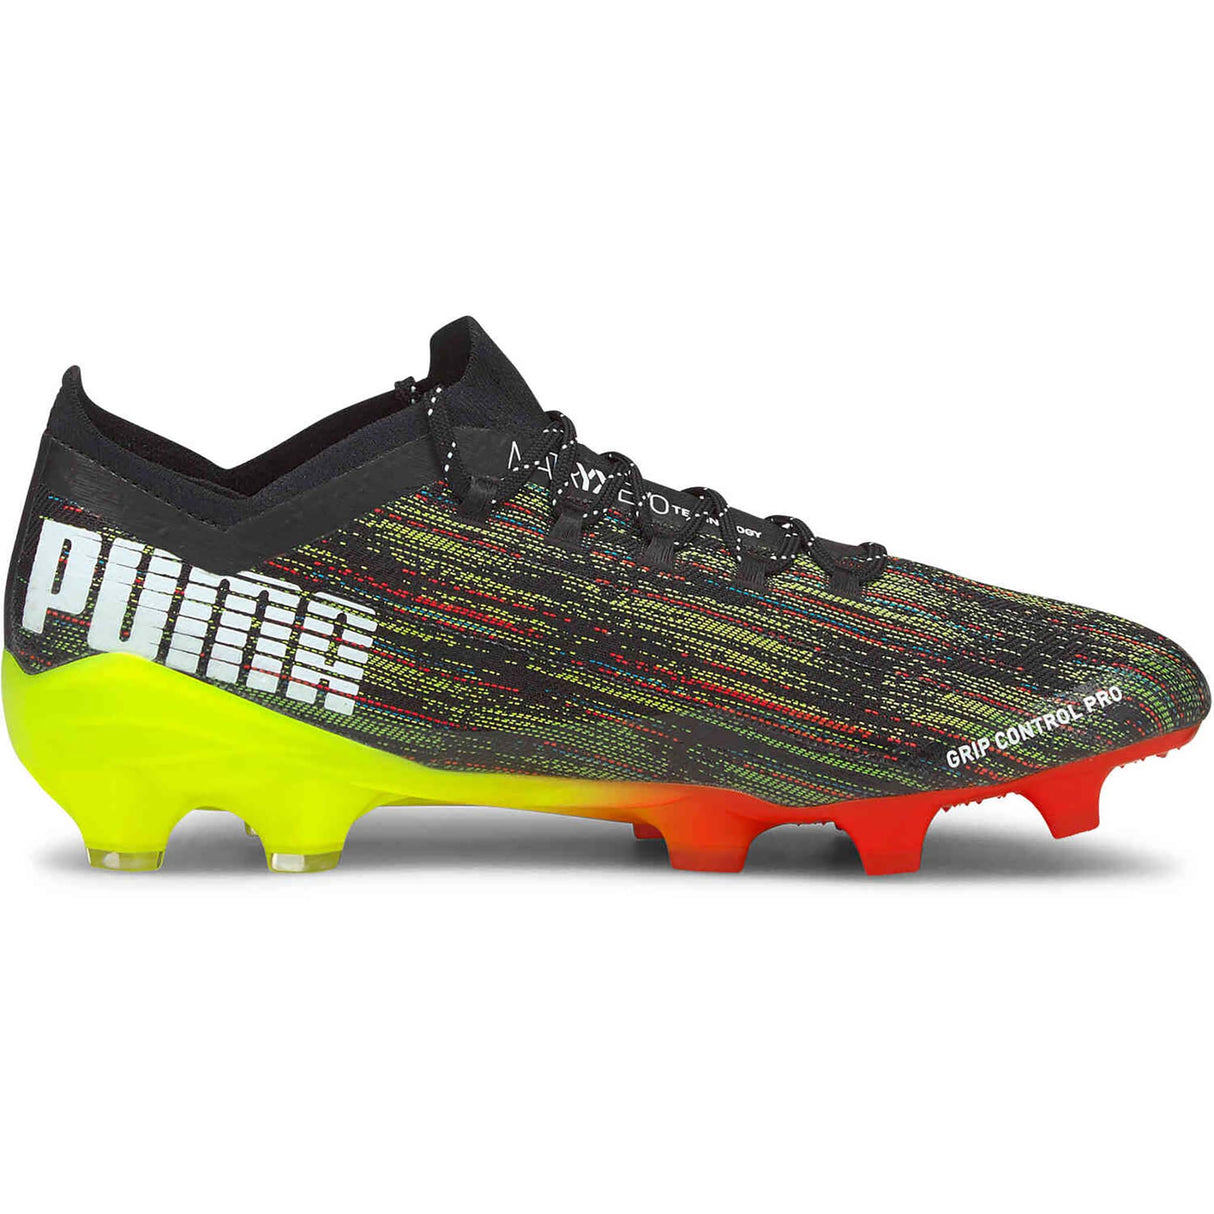 Puma Ultra 1.2 FG chaussures de soccer a crampons noir blanc jaune intérieur